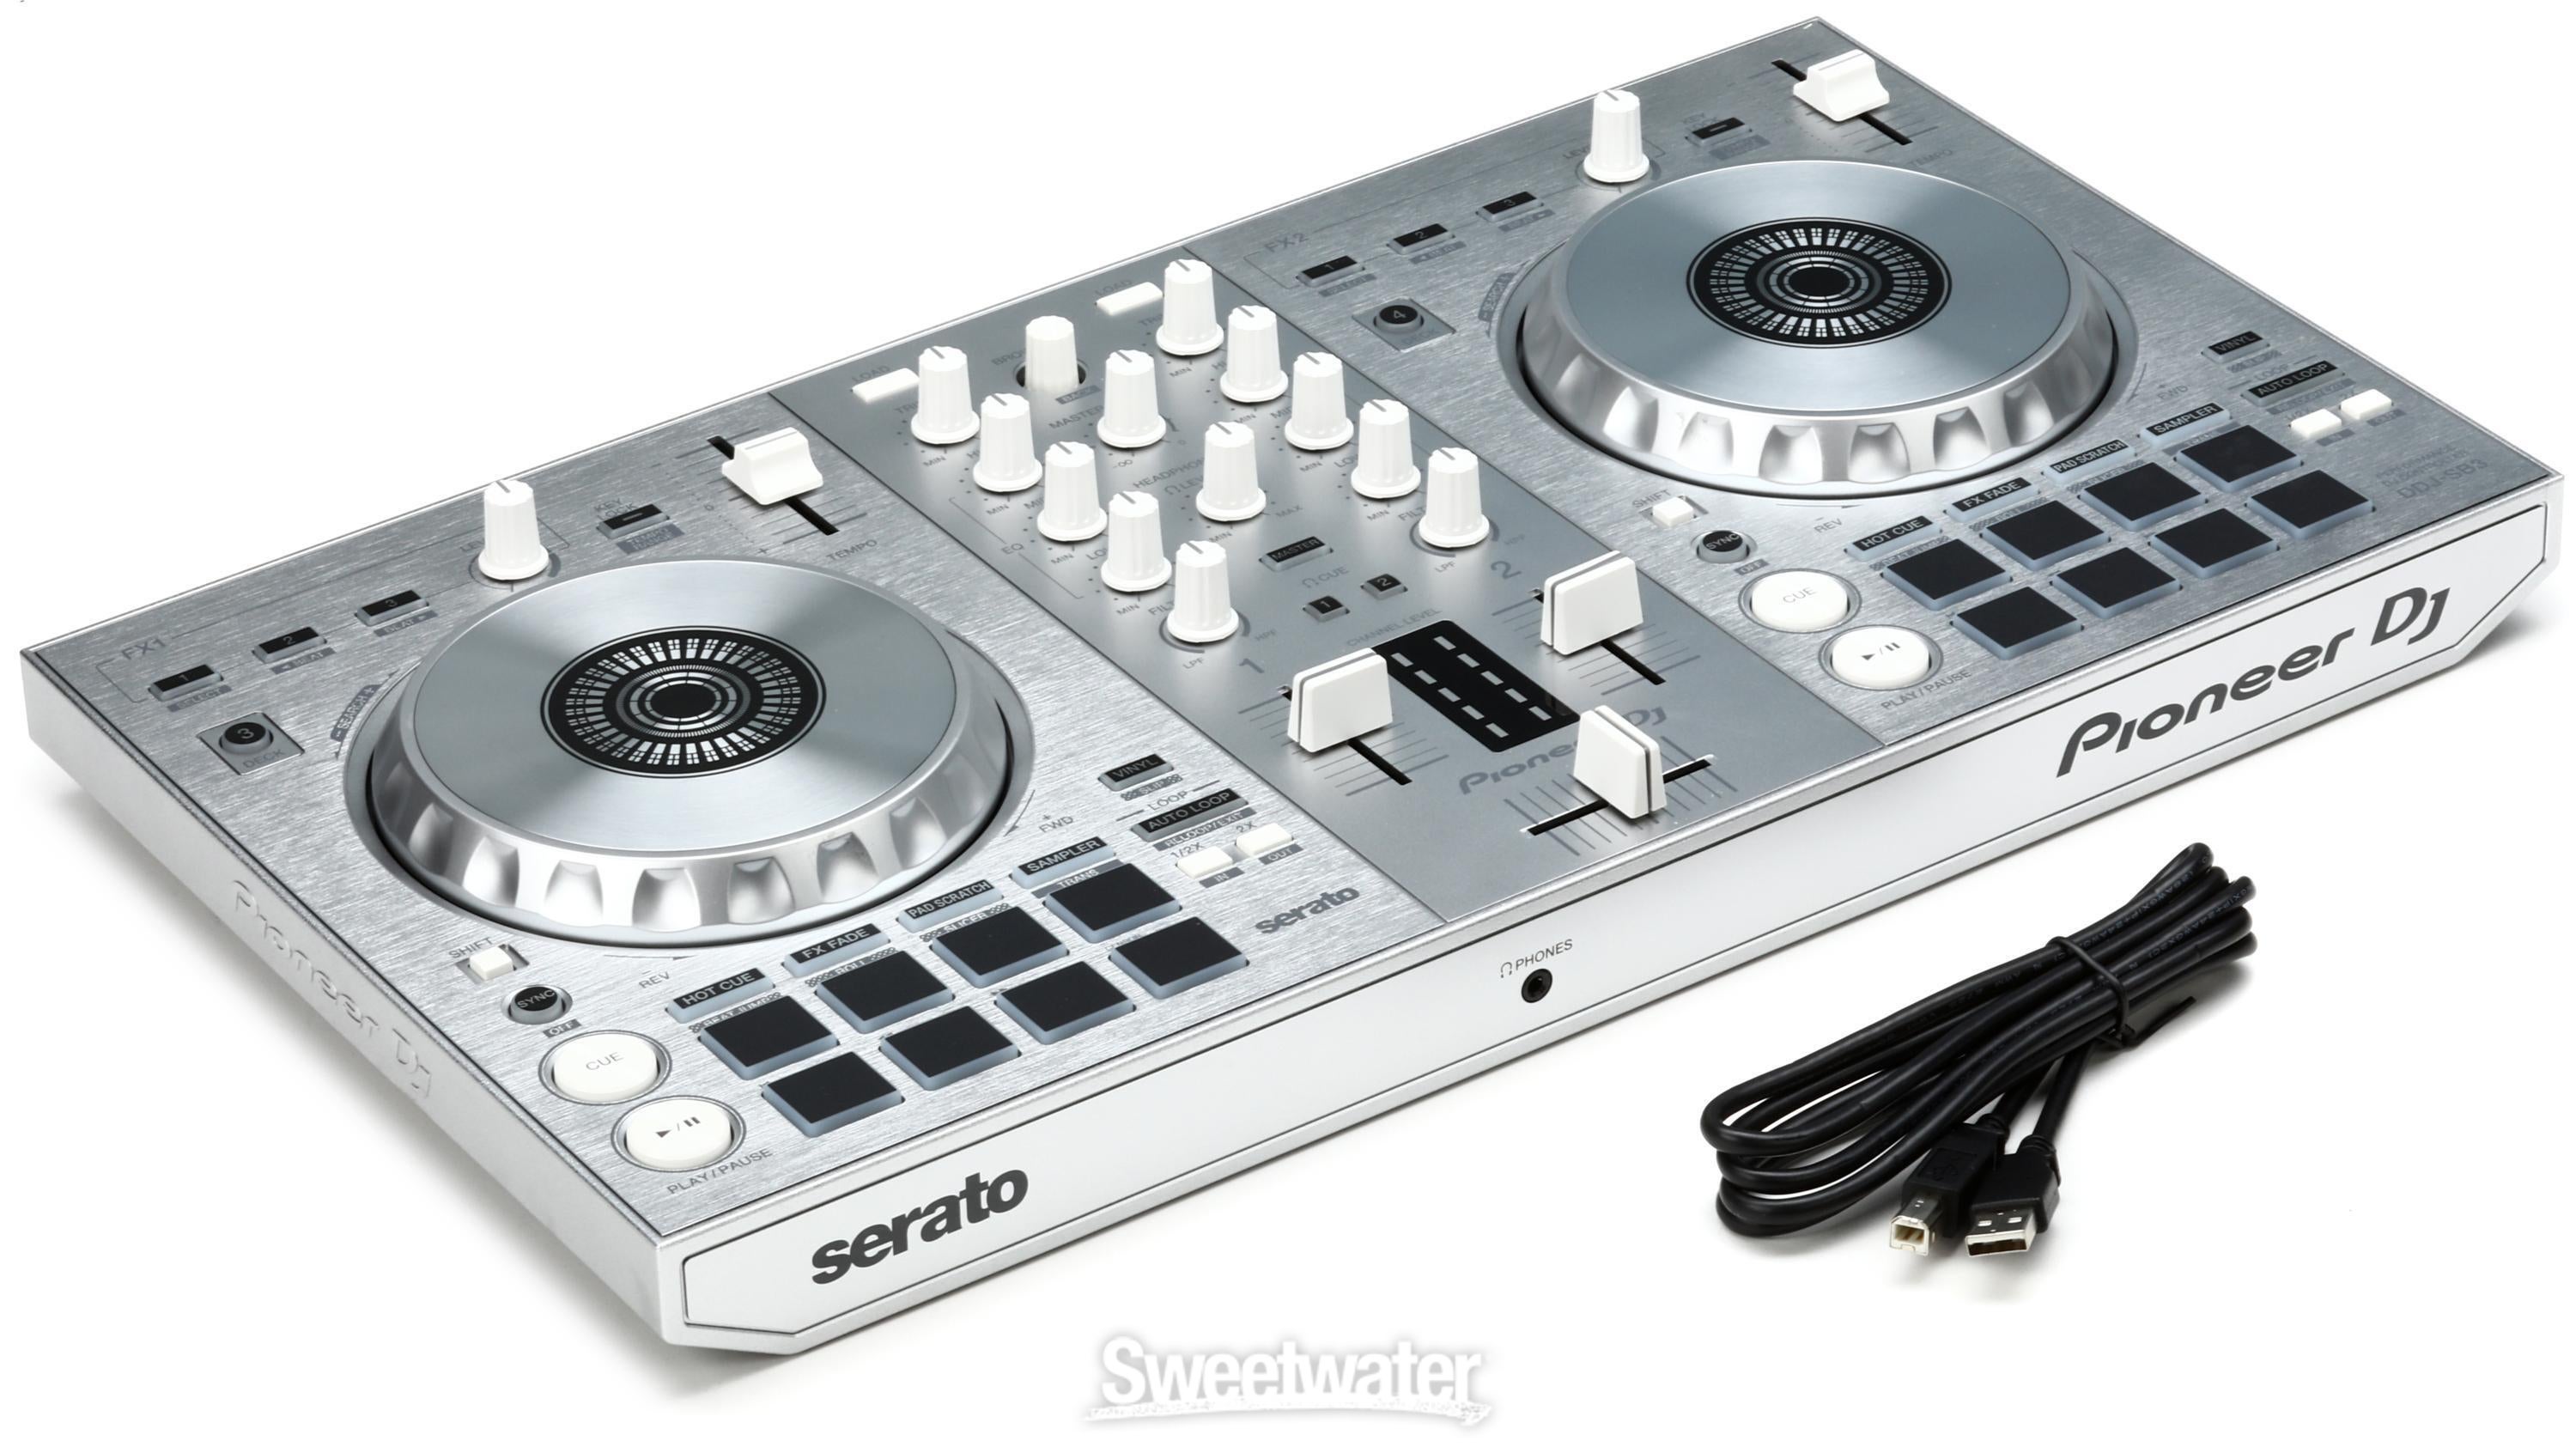 Pioneer DJ DDJ-SB3 Limited Edition Silver 4-deck Serato DJ